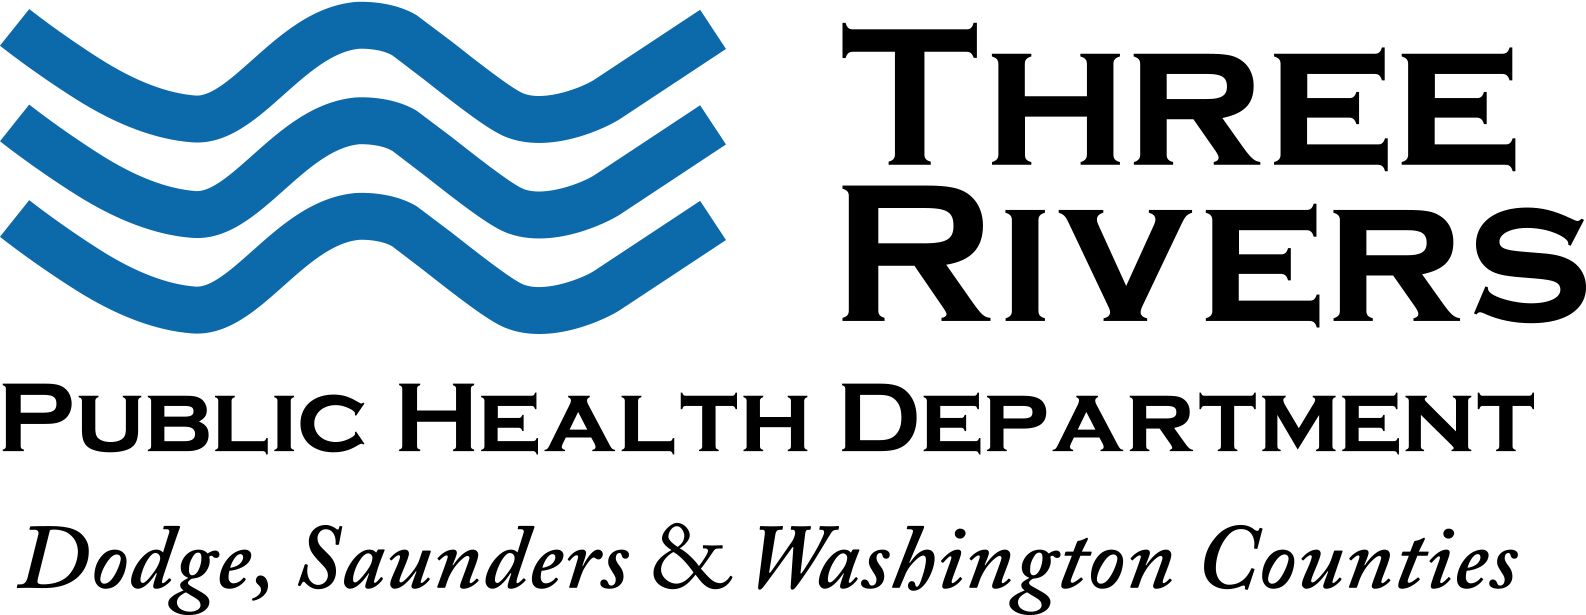 Three Rivers Health Department